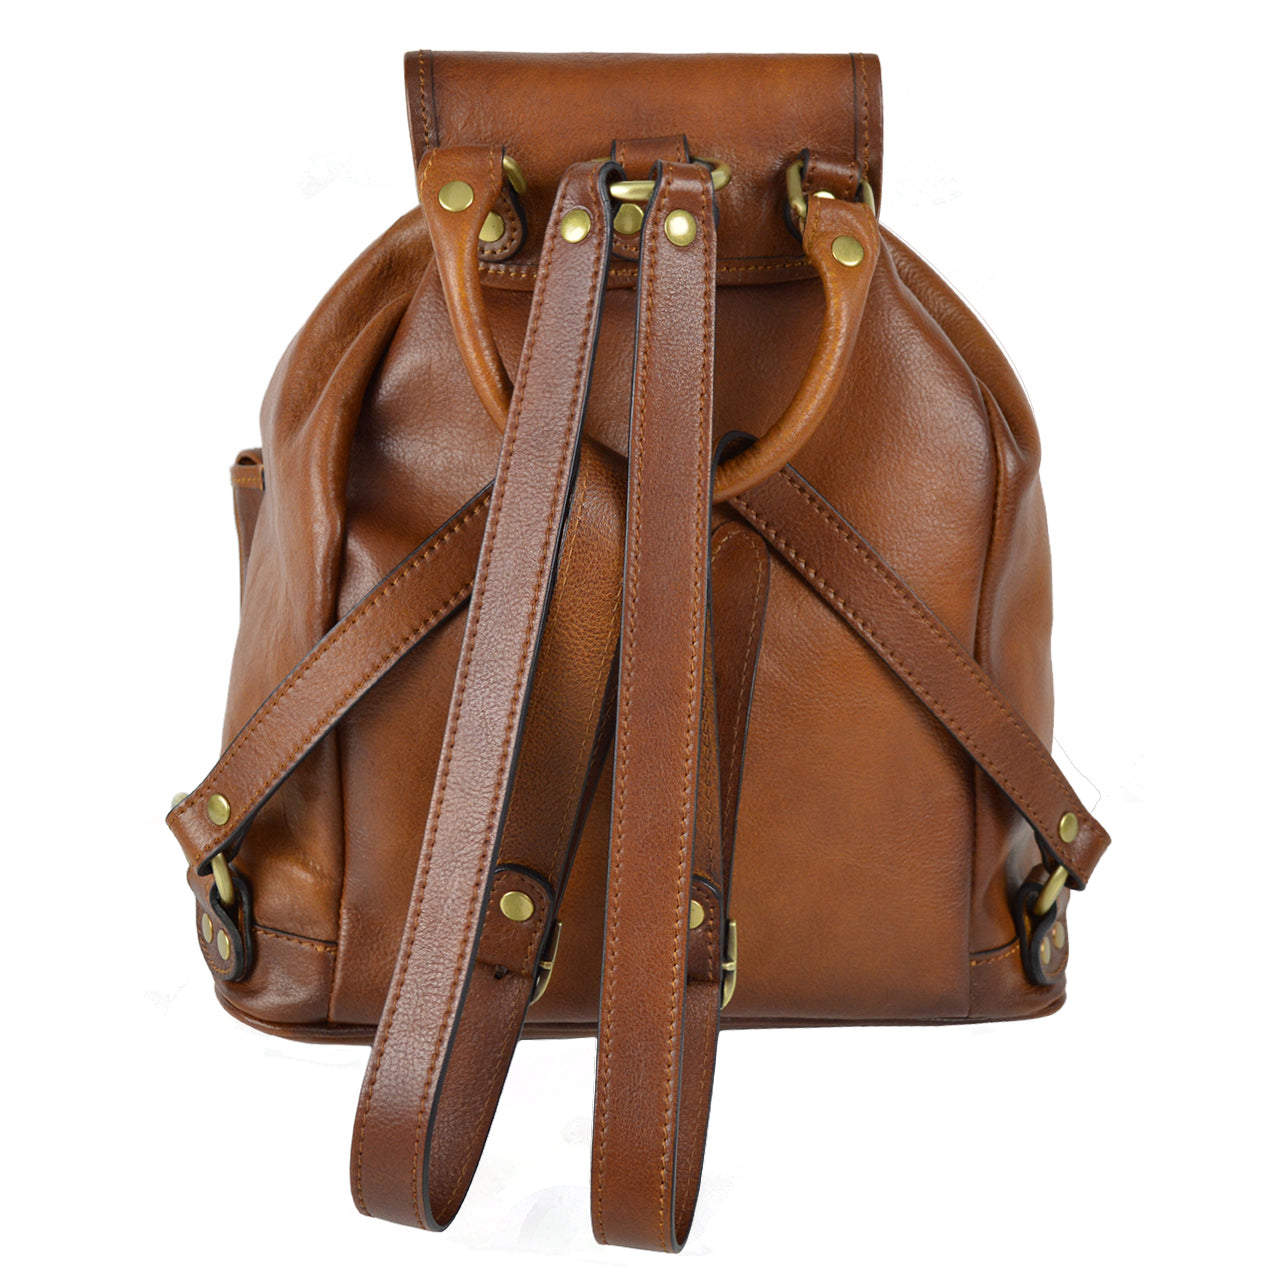 Pratesi Backpack Caporalino in genuine Italian leather